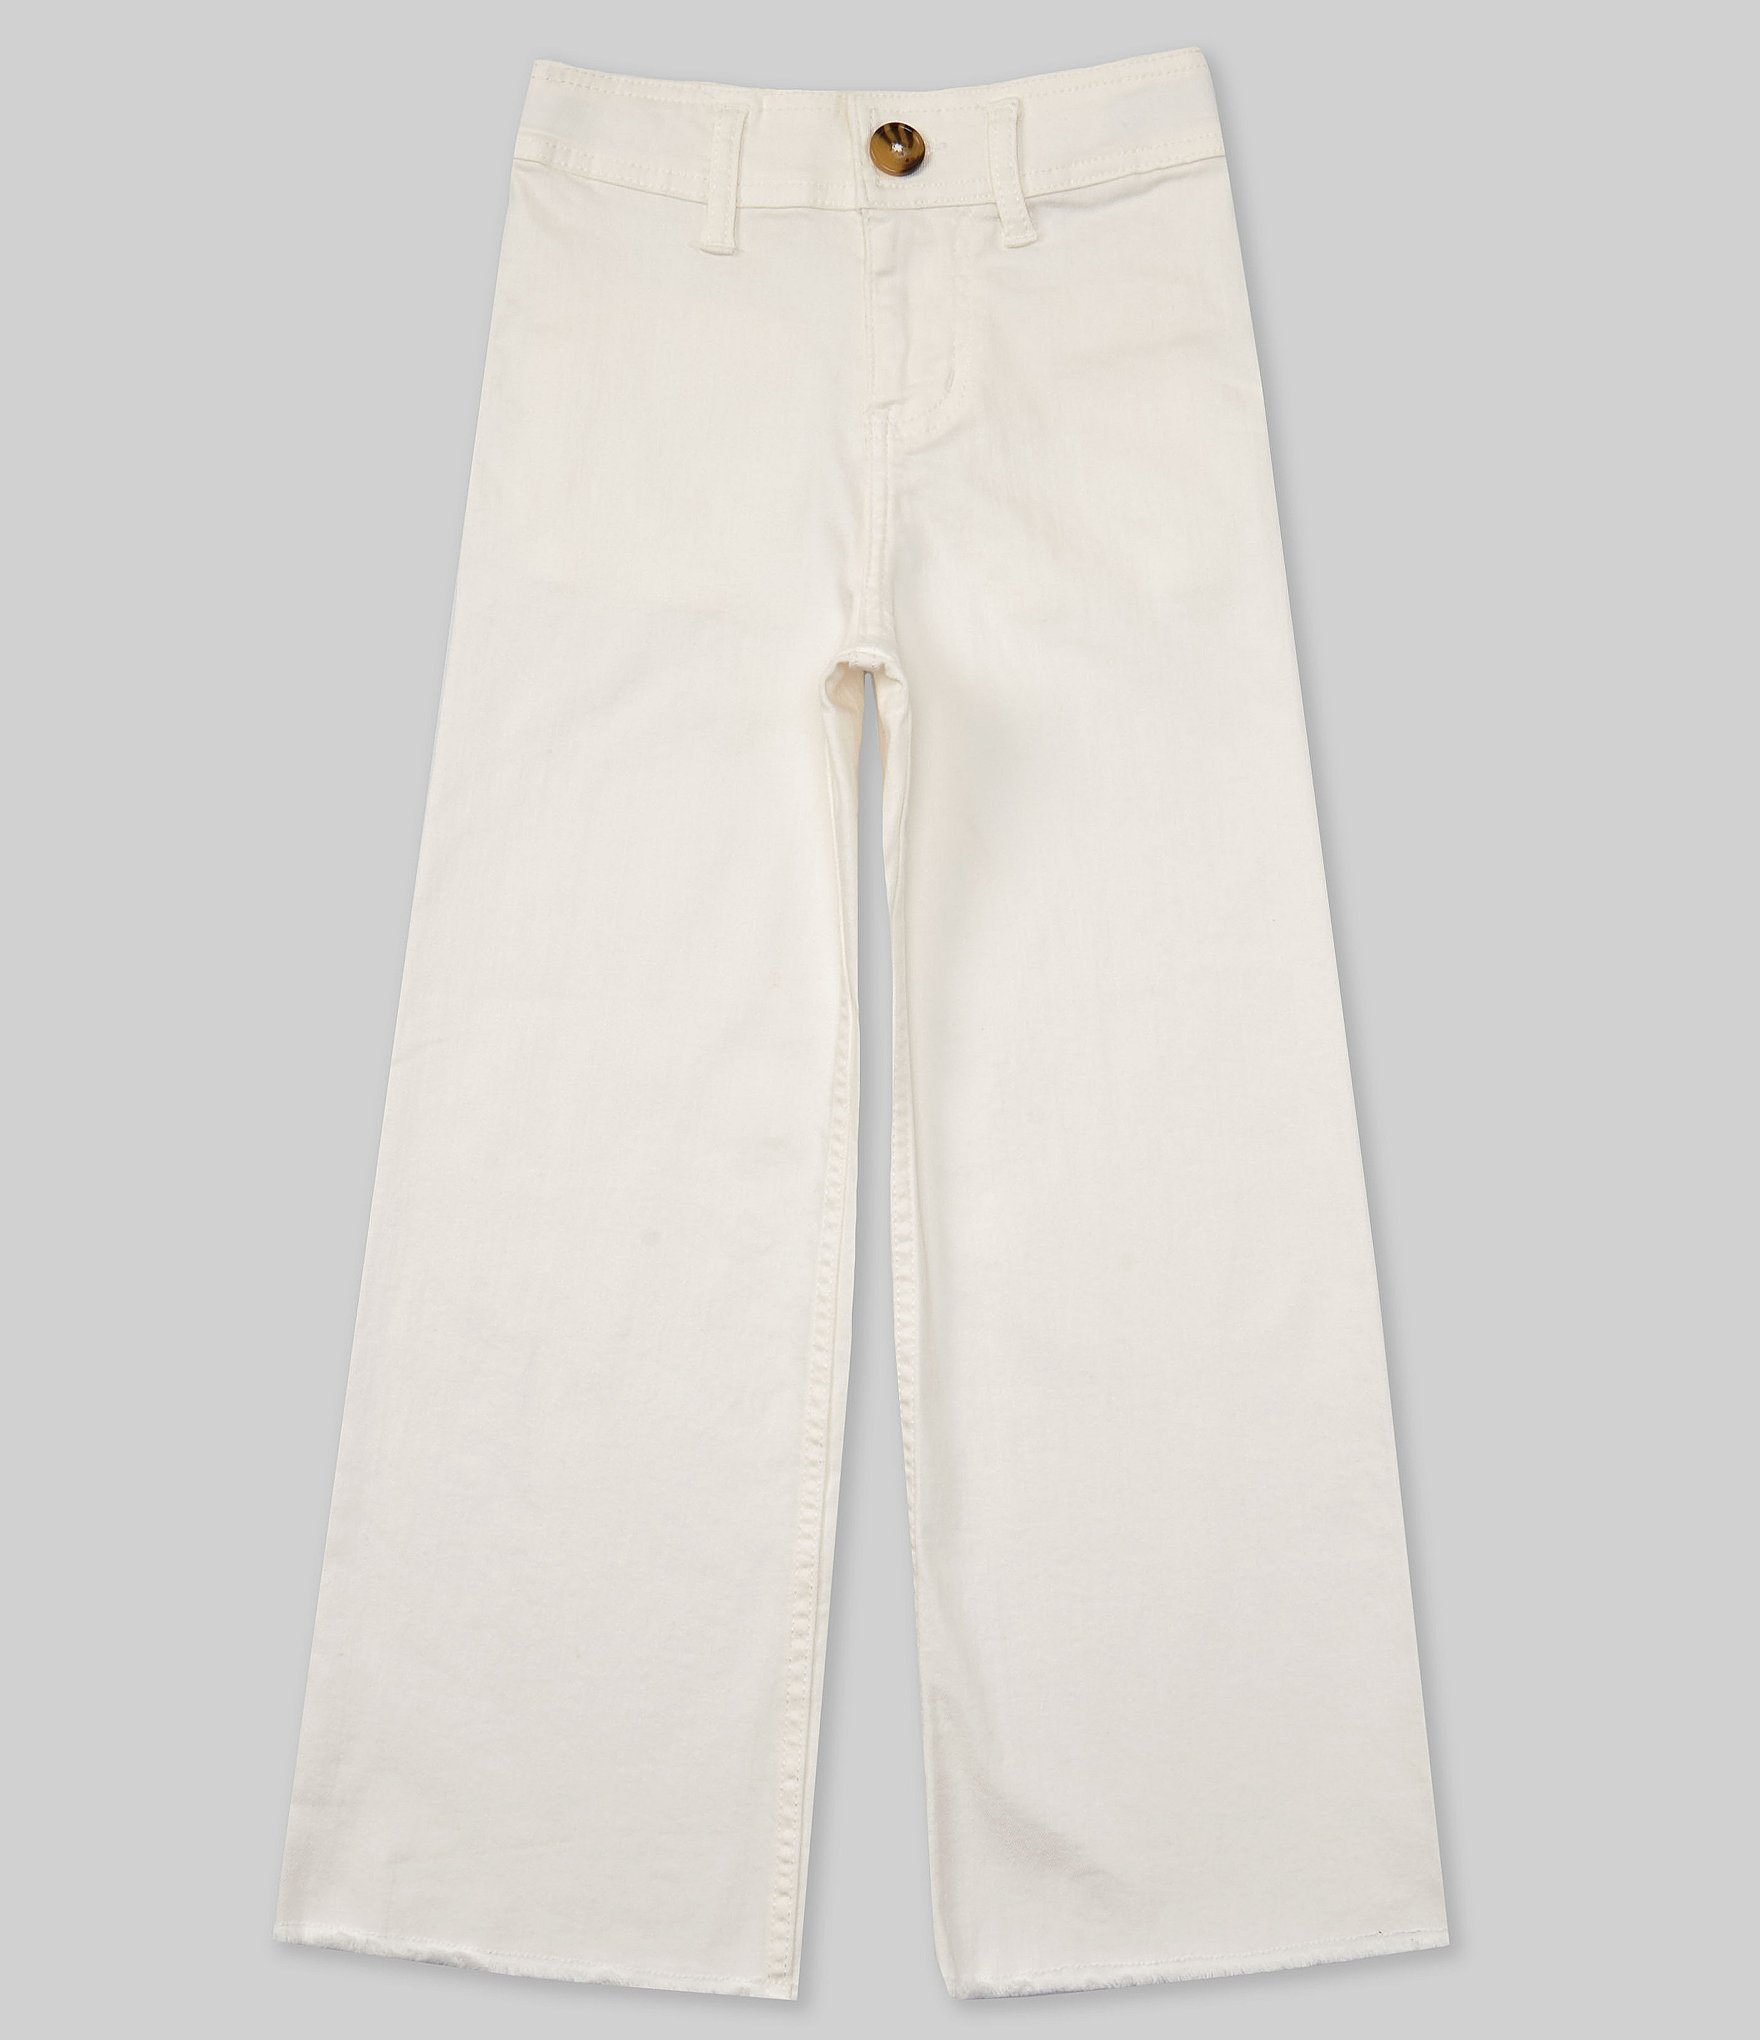 Slim High Ankle Jeans - White - Ladies | H&M IN